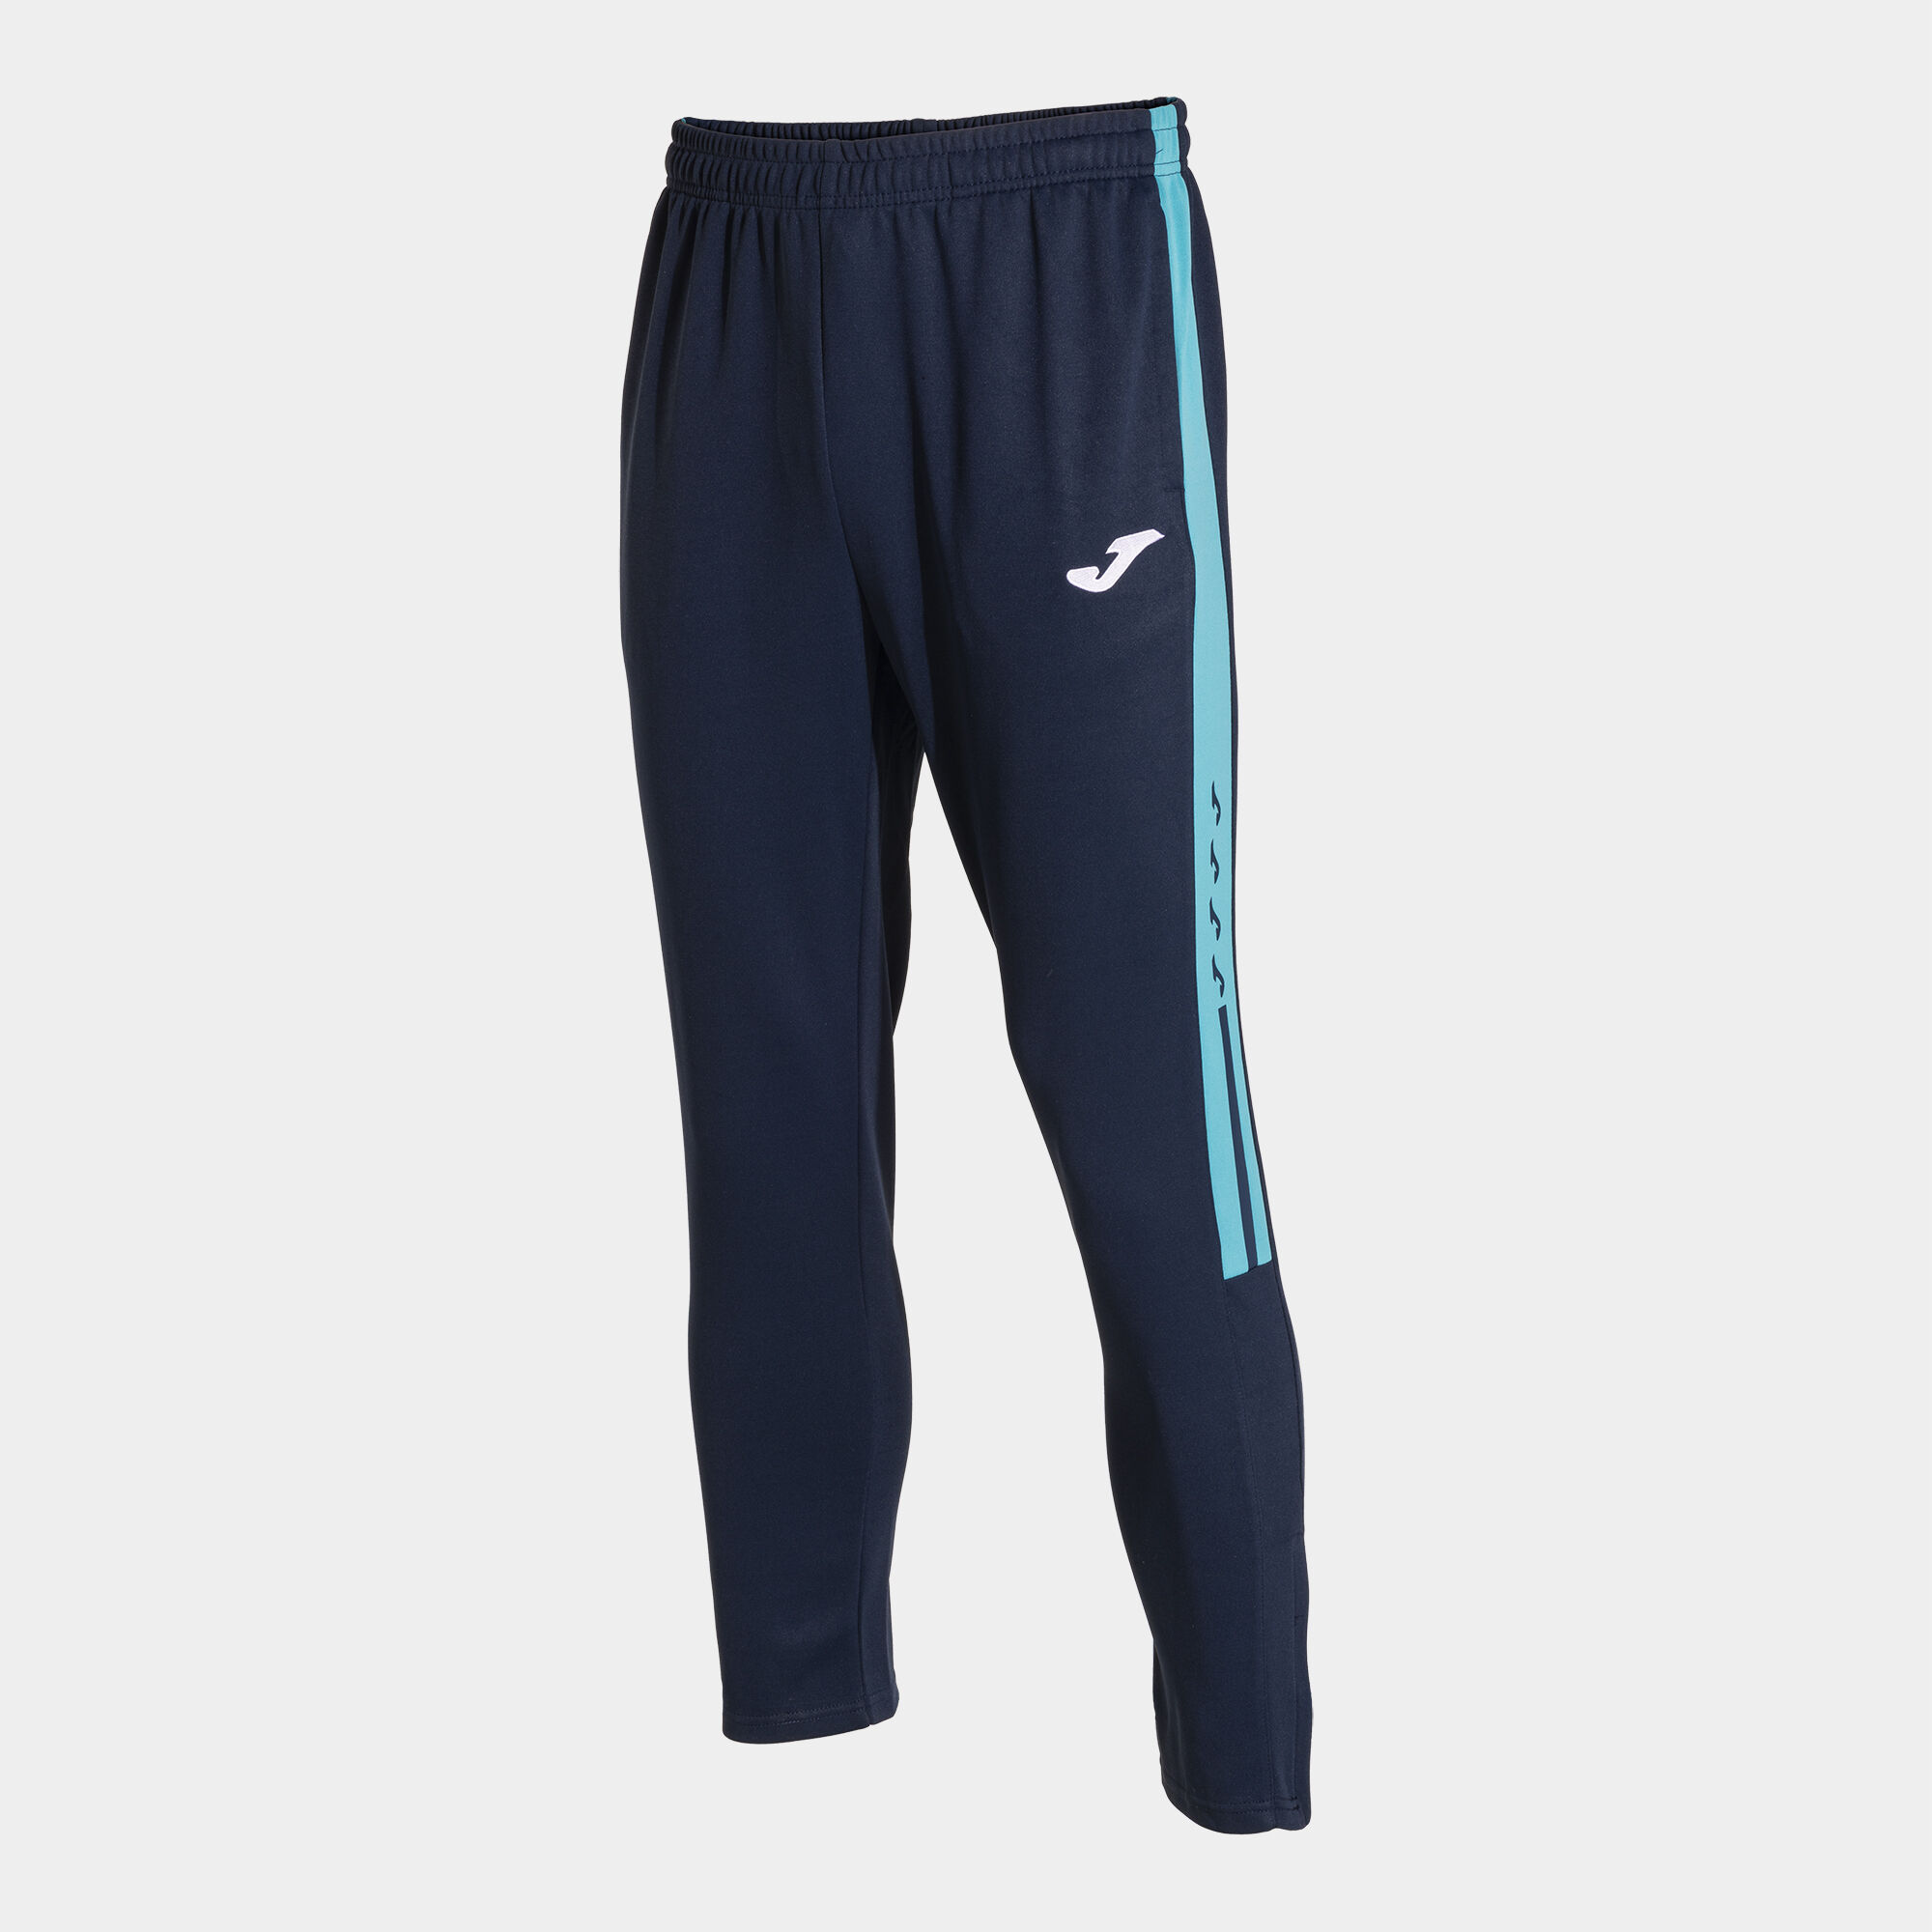 Longs pants man Olimpiada navy blue fluorescent turquoise